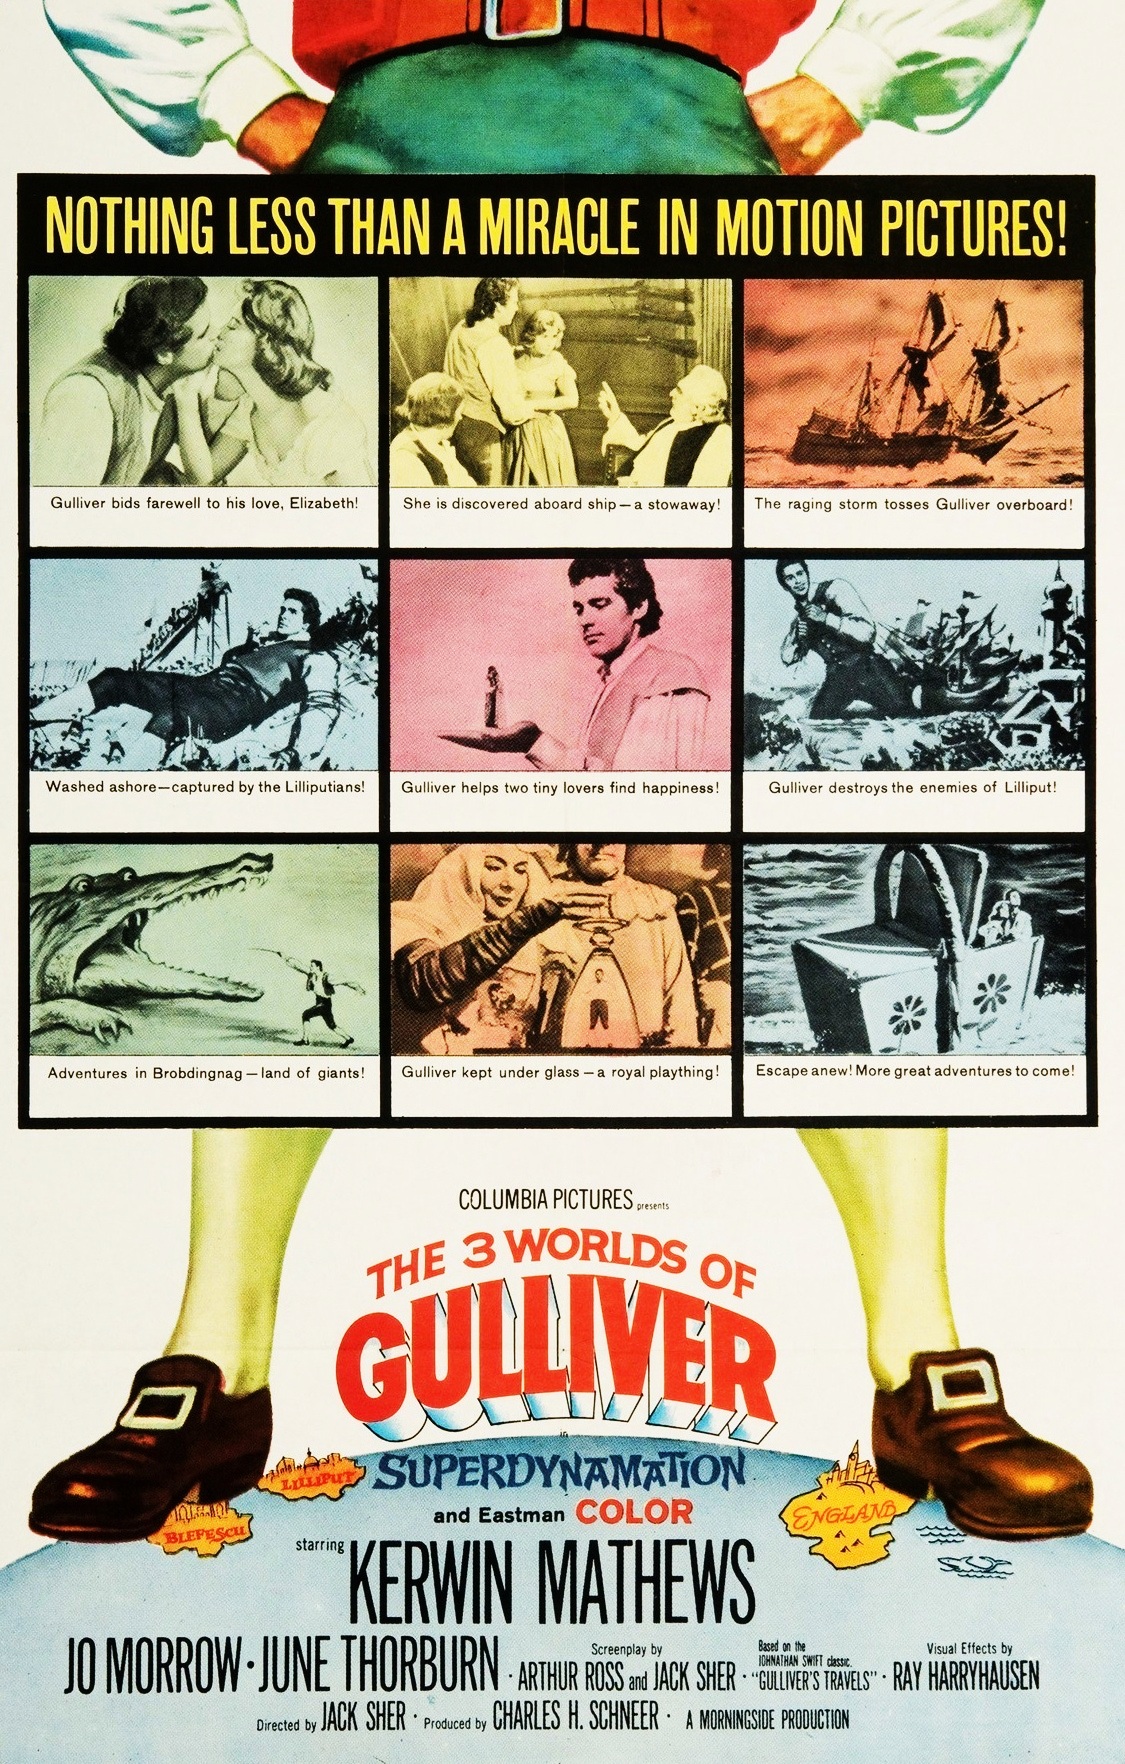 Nonton film The 3 Worlds of Gulliver layarkaca21 indoxx1 ganool online streaming terbaru